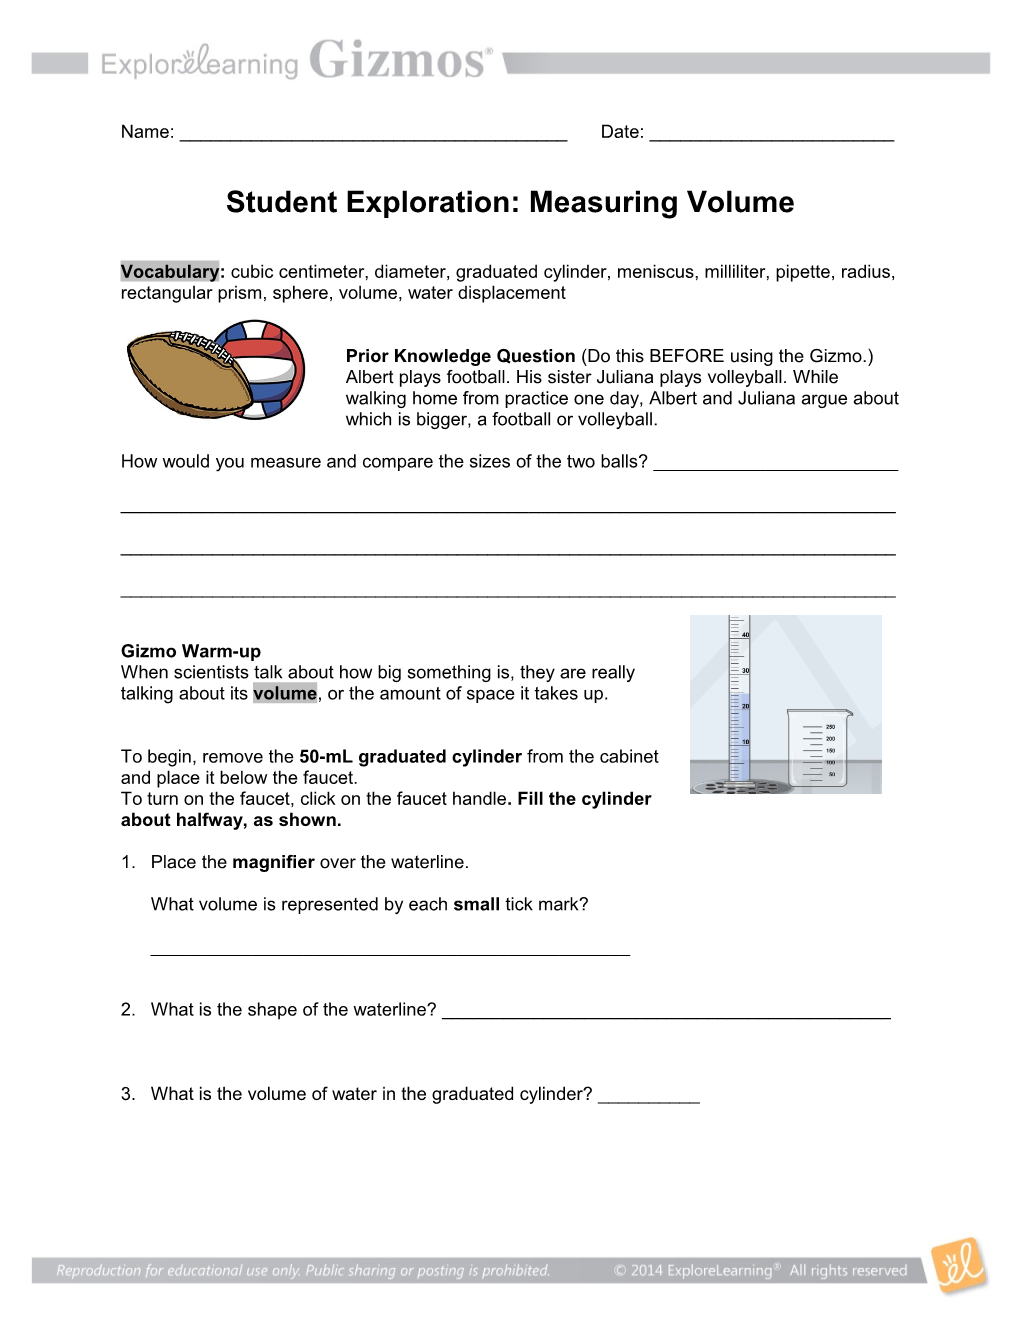 Student Exploration: Measuring Volume